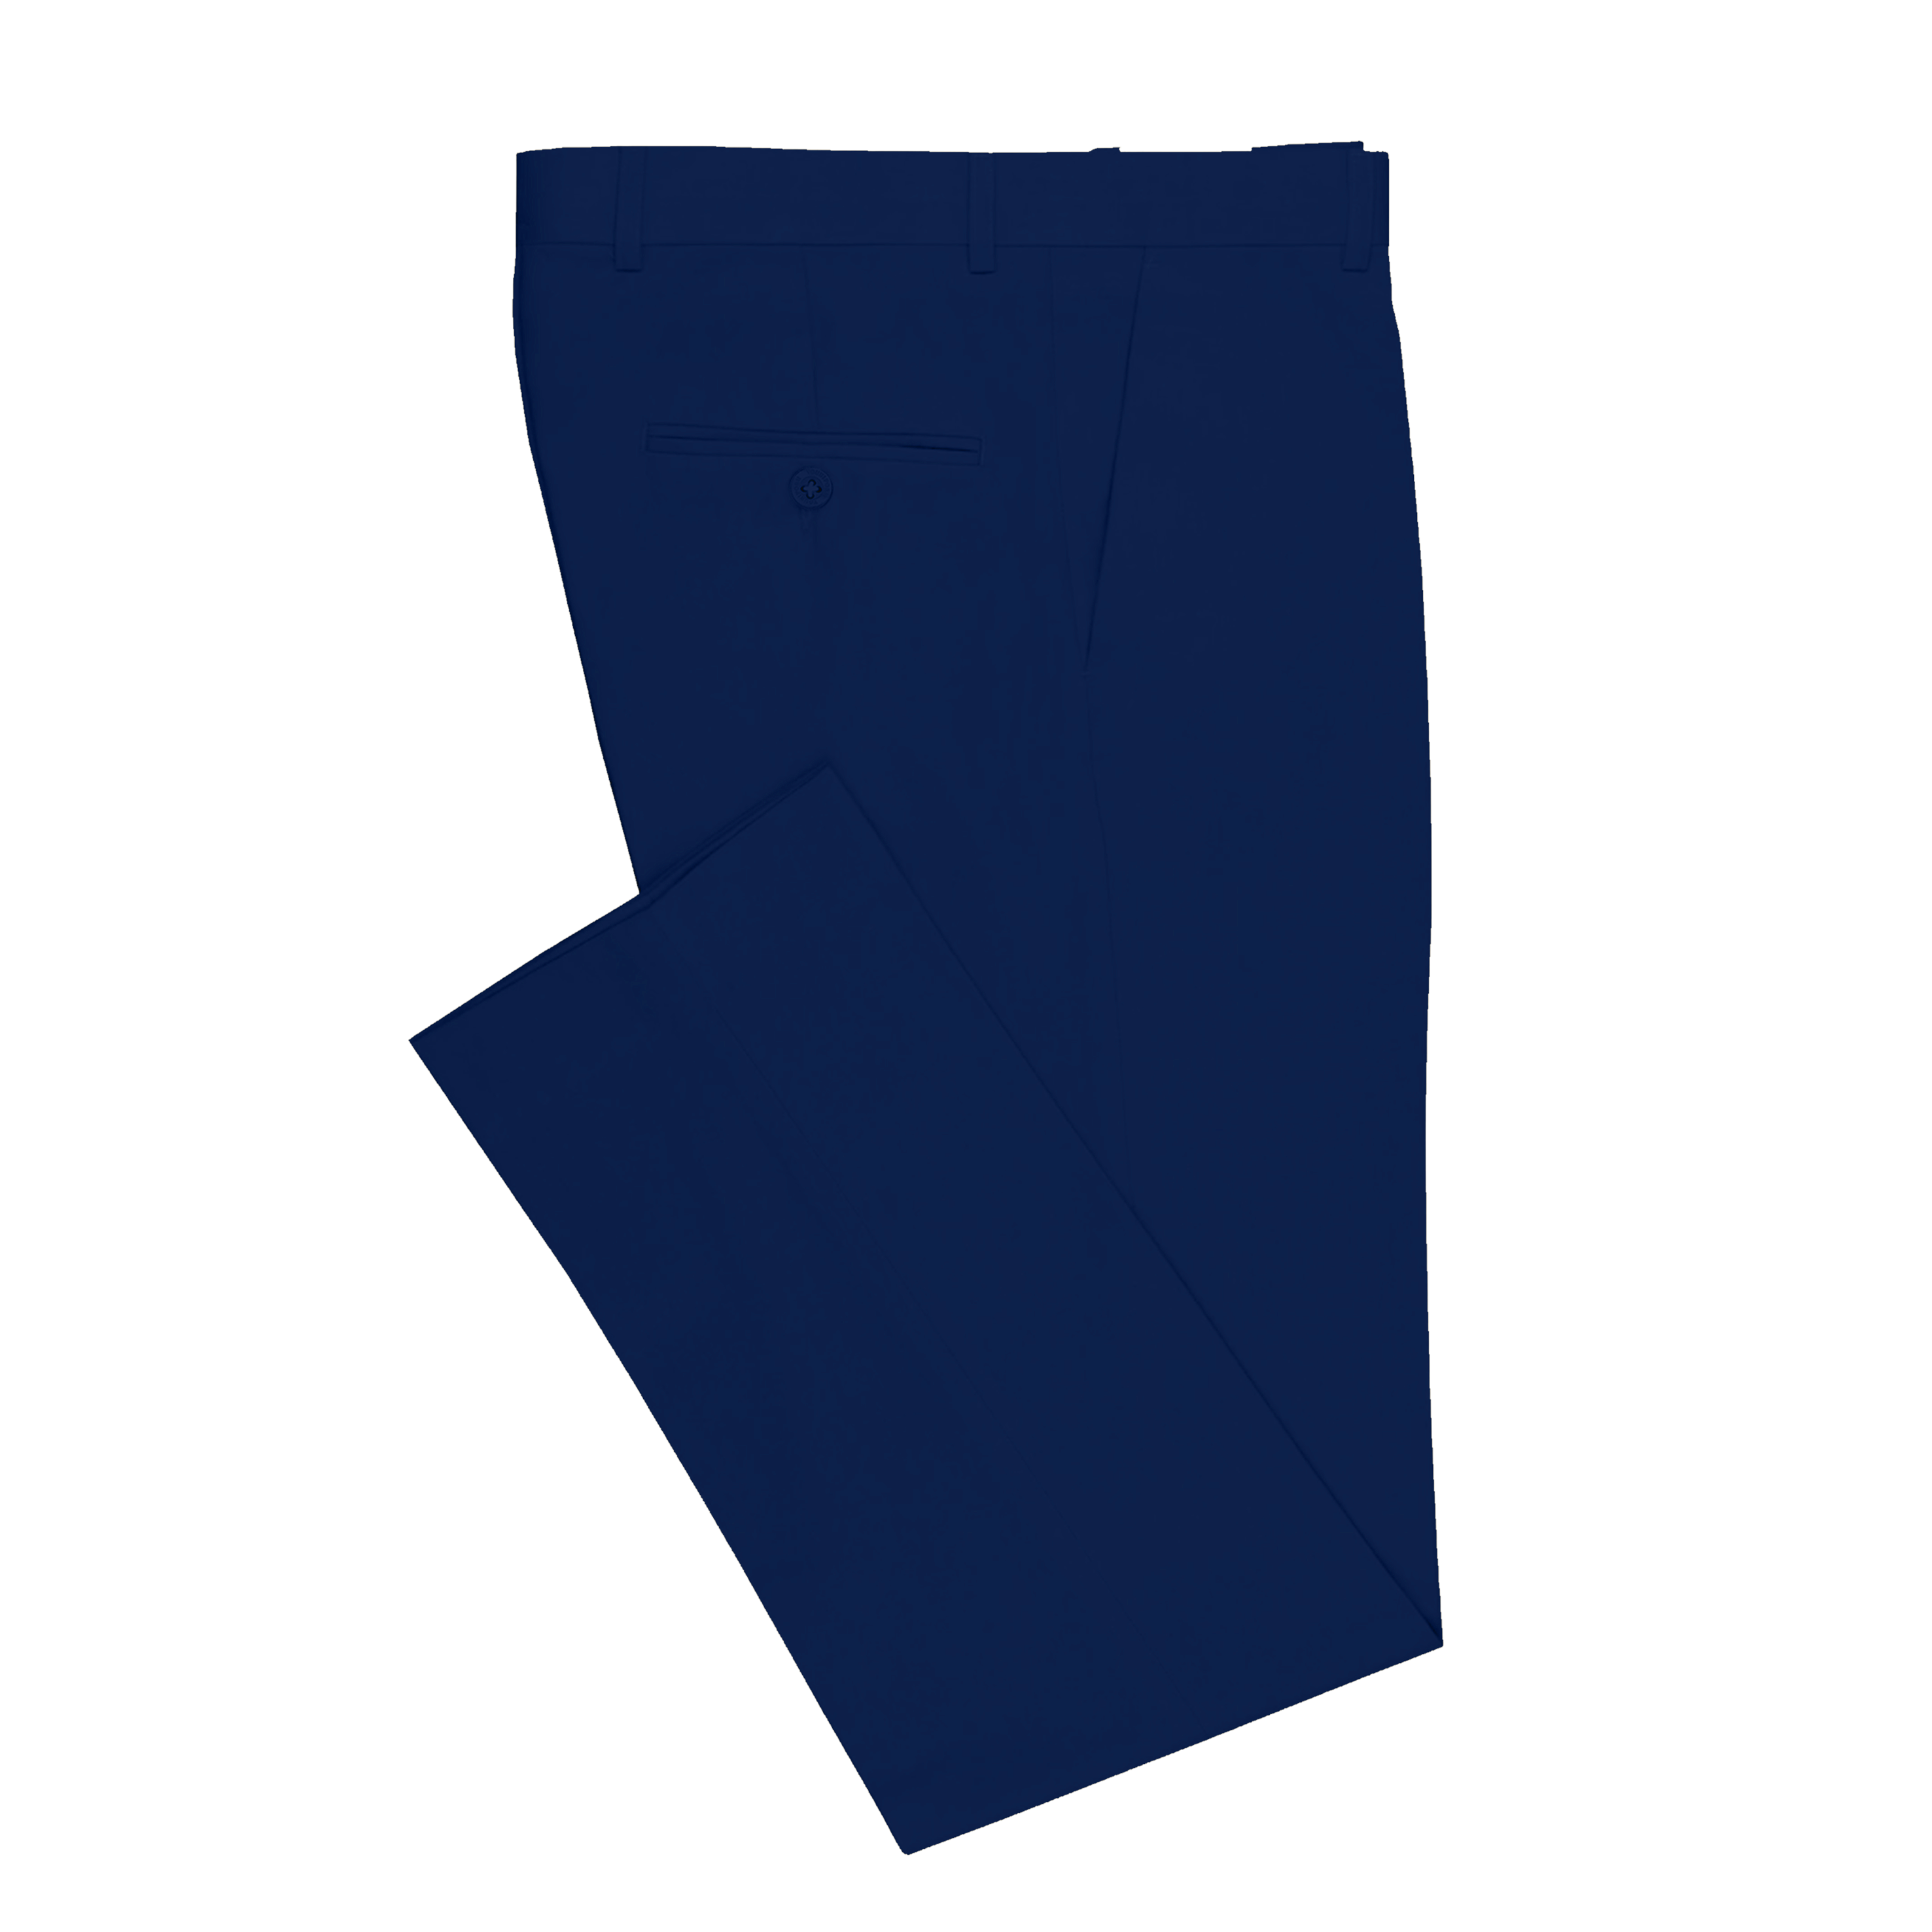 Navy Blue Fixed Belt Pants - Youniform